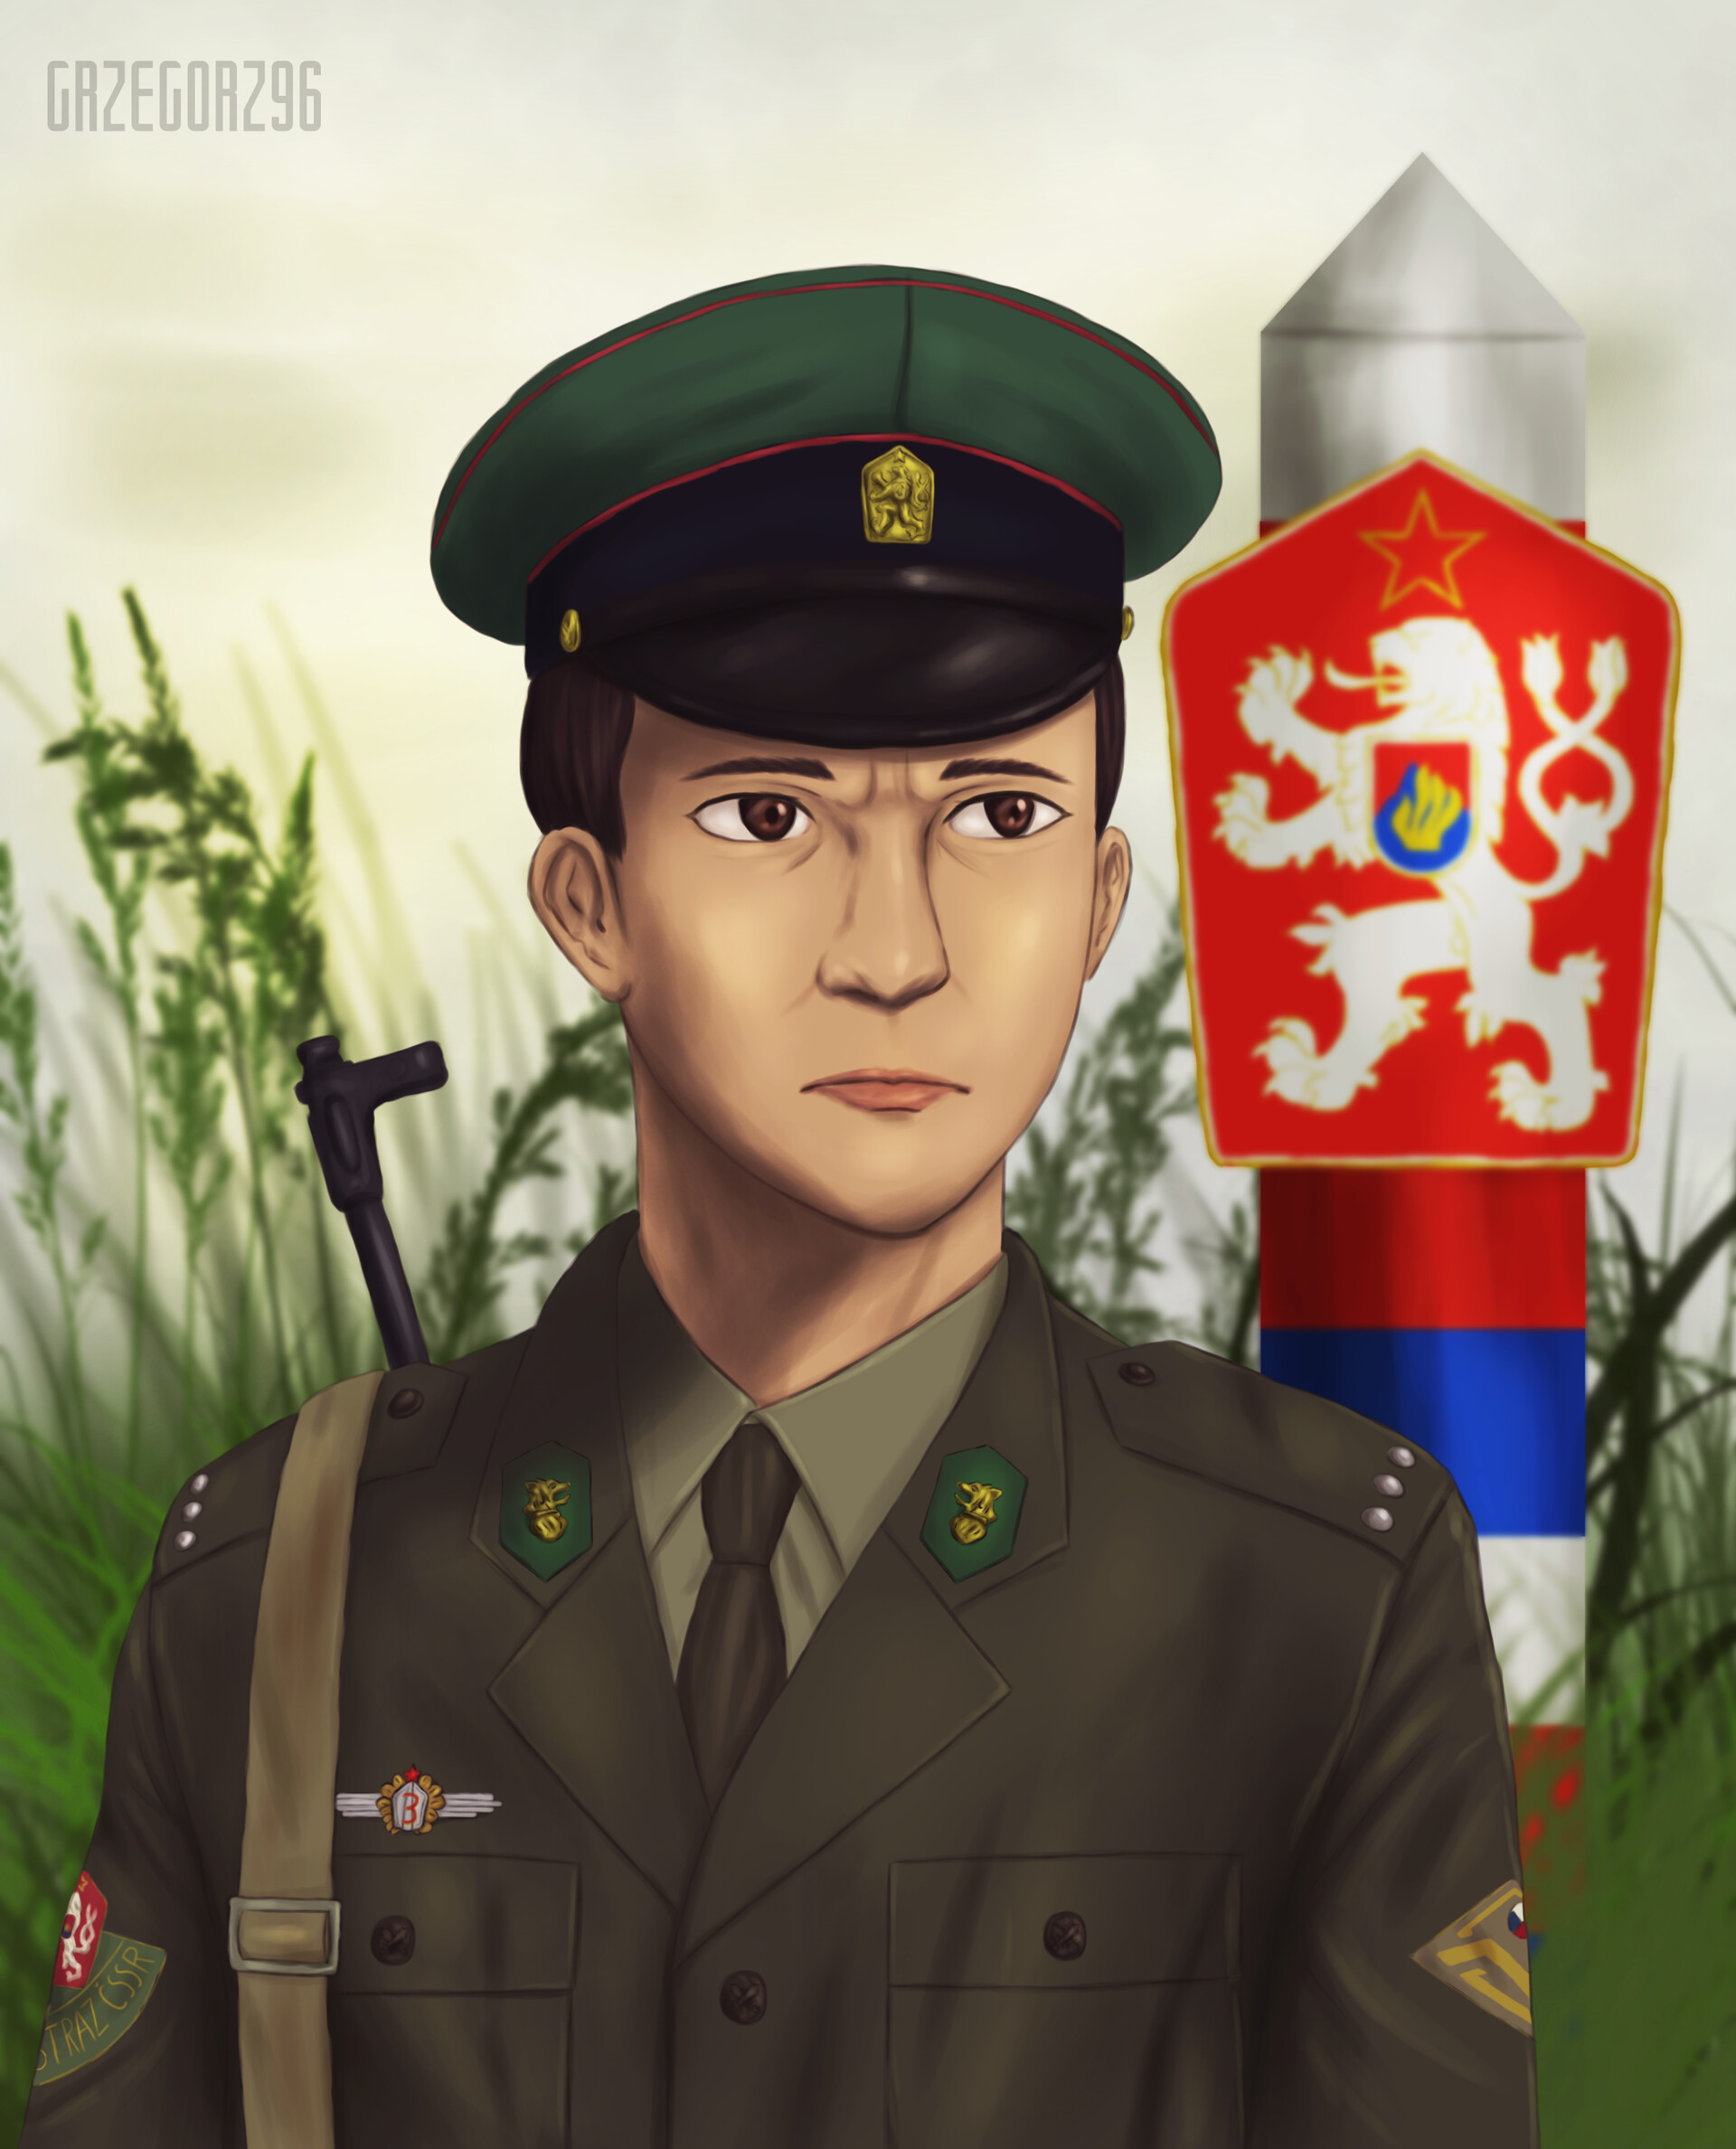 nopanut-phetkaew-czech-border-guard.jpg